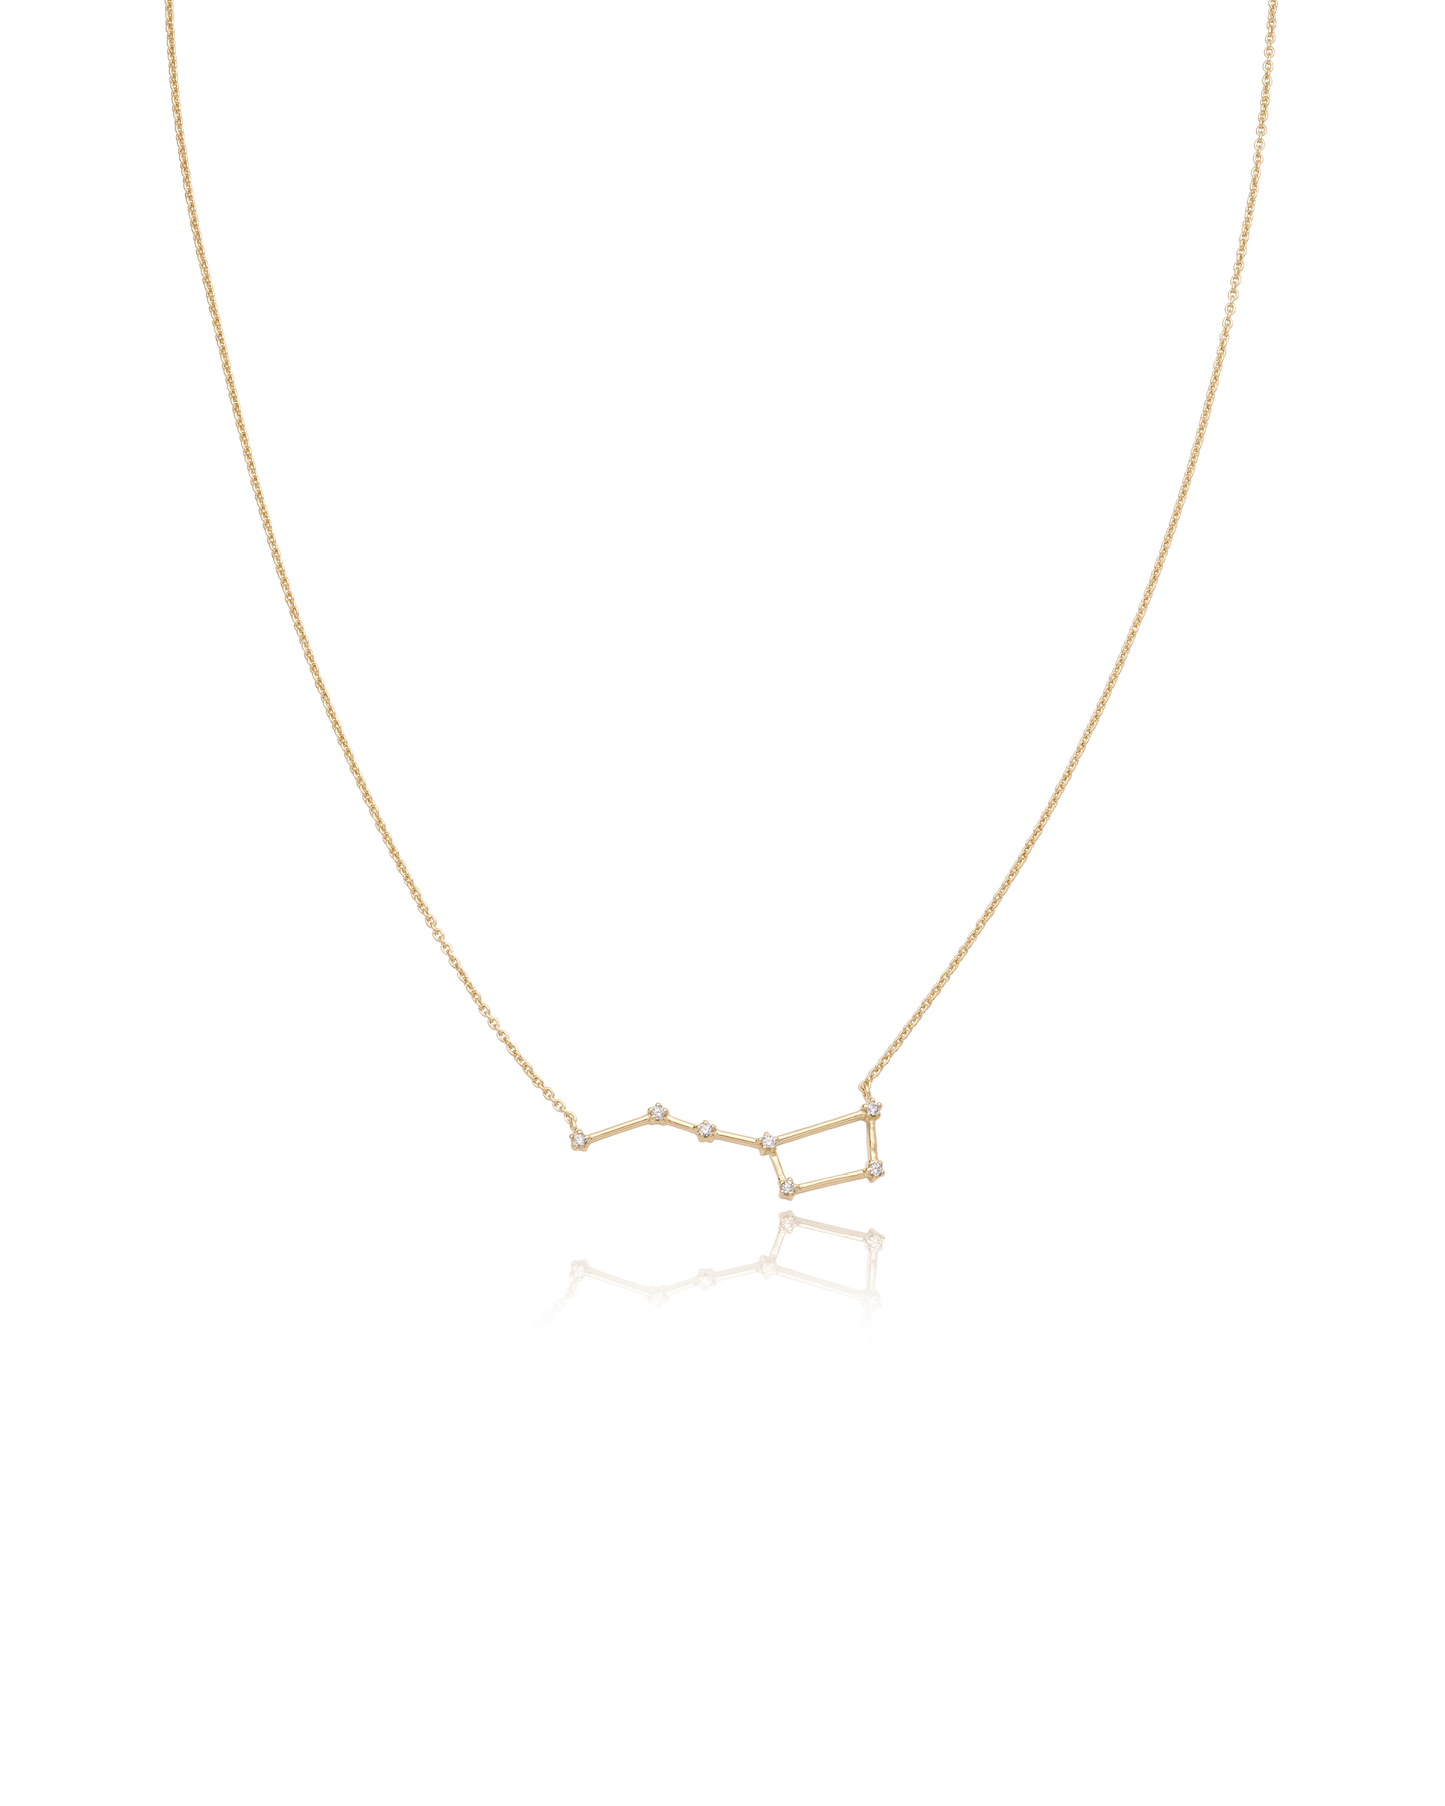 Ursa Major Constellation Necklace - 18K Gold Vermeil Necklaces magal-dev Big Dipper 16" 